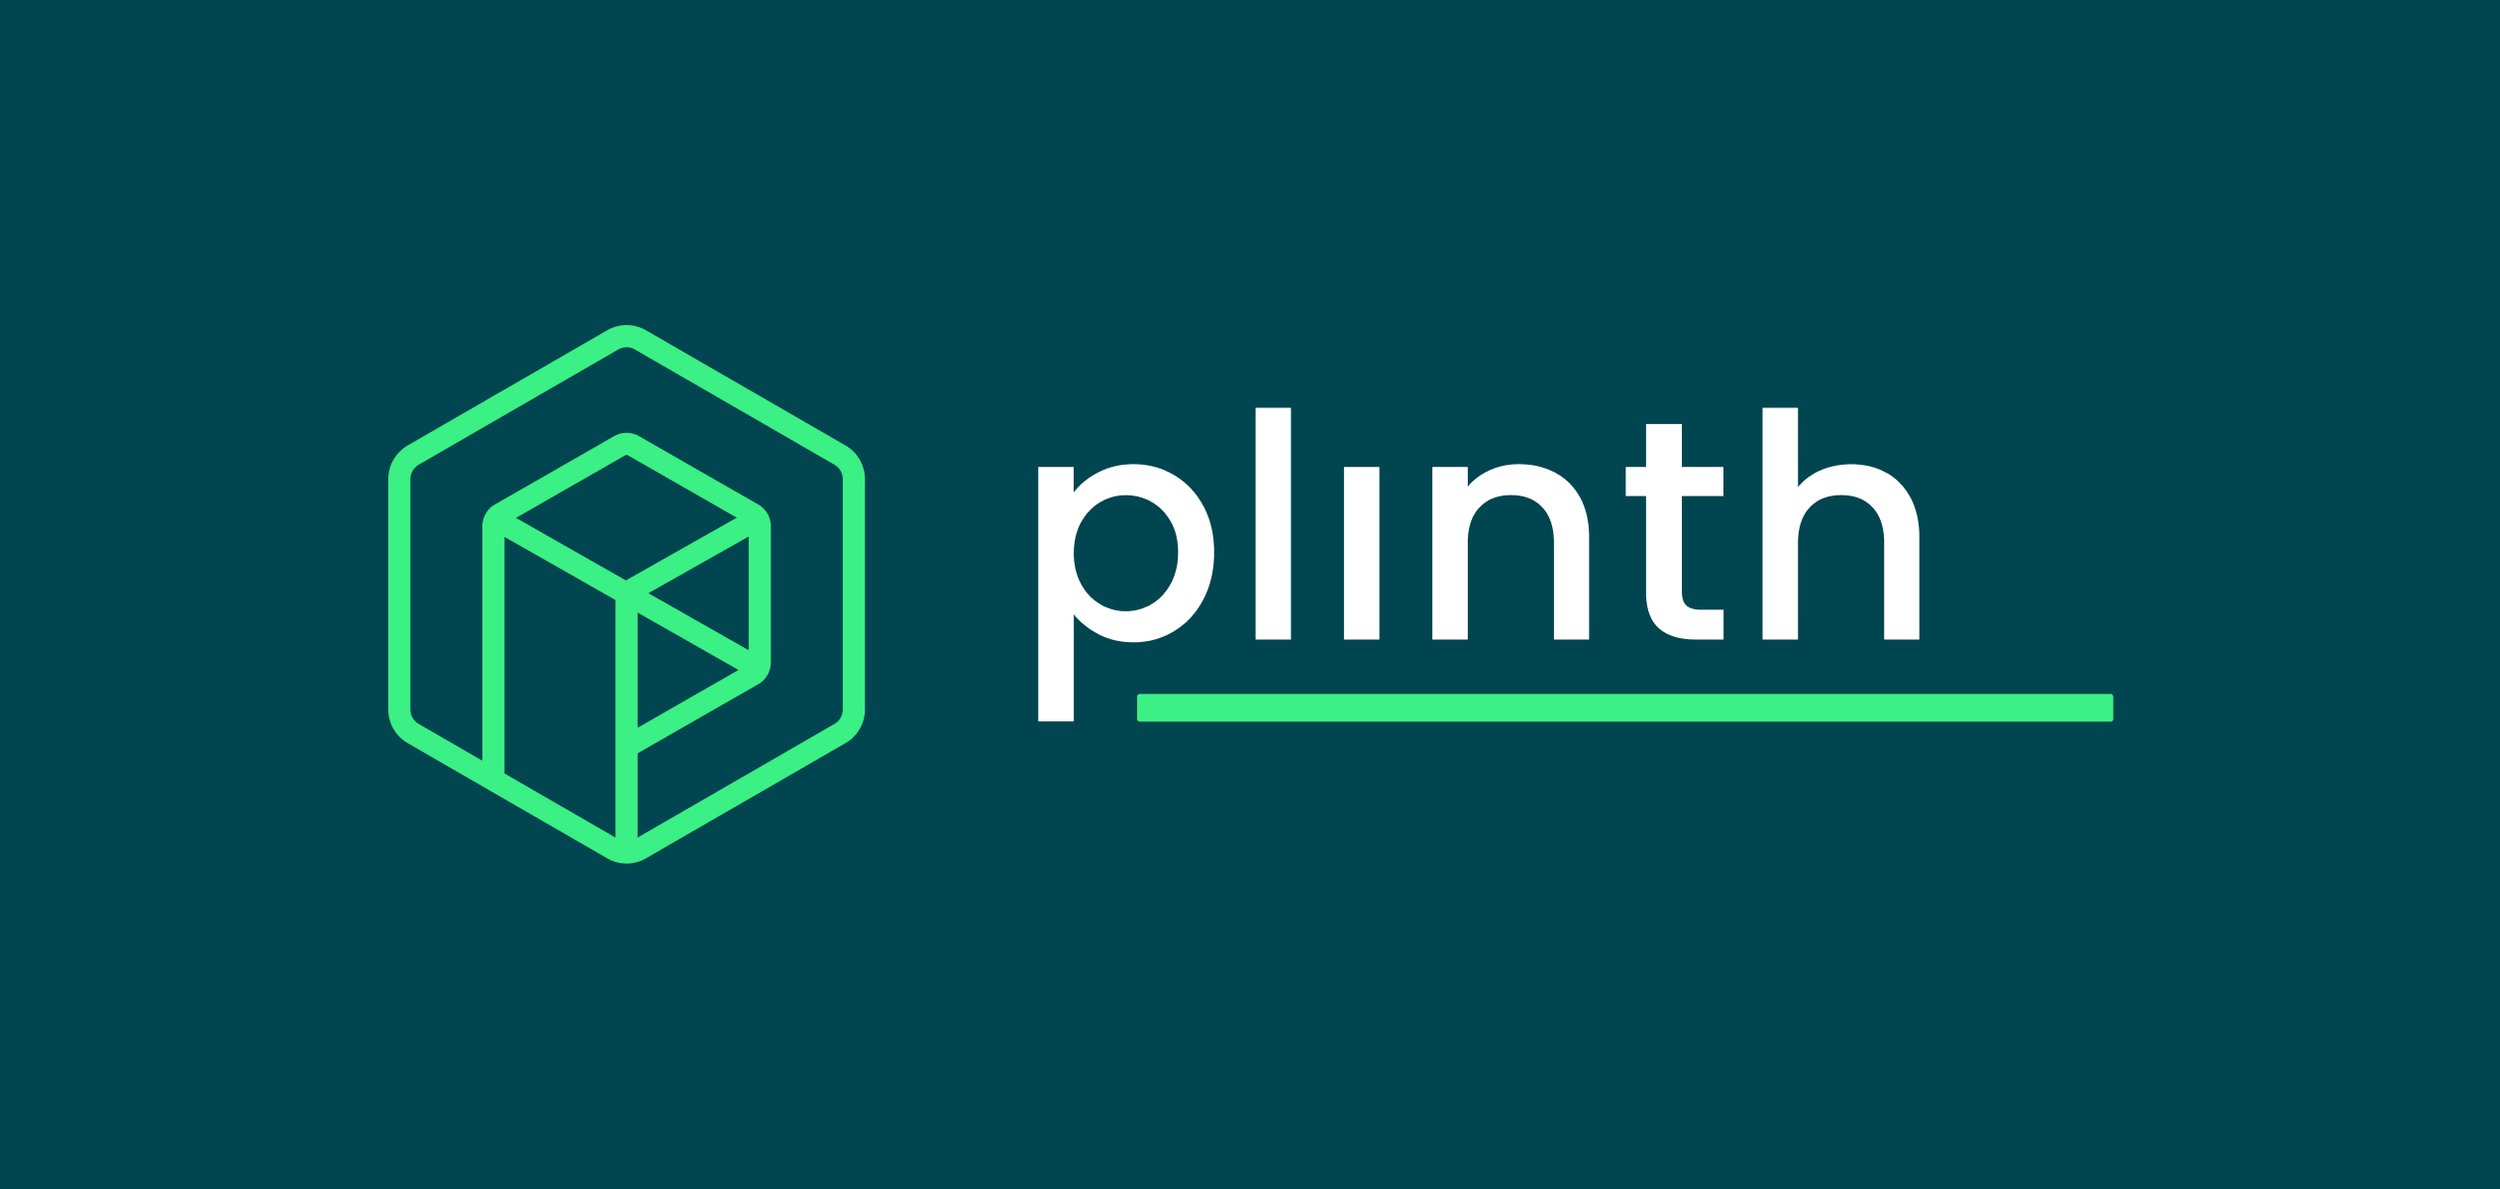 plinth: The Community Impact Platform